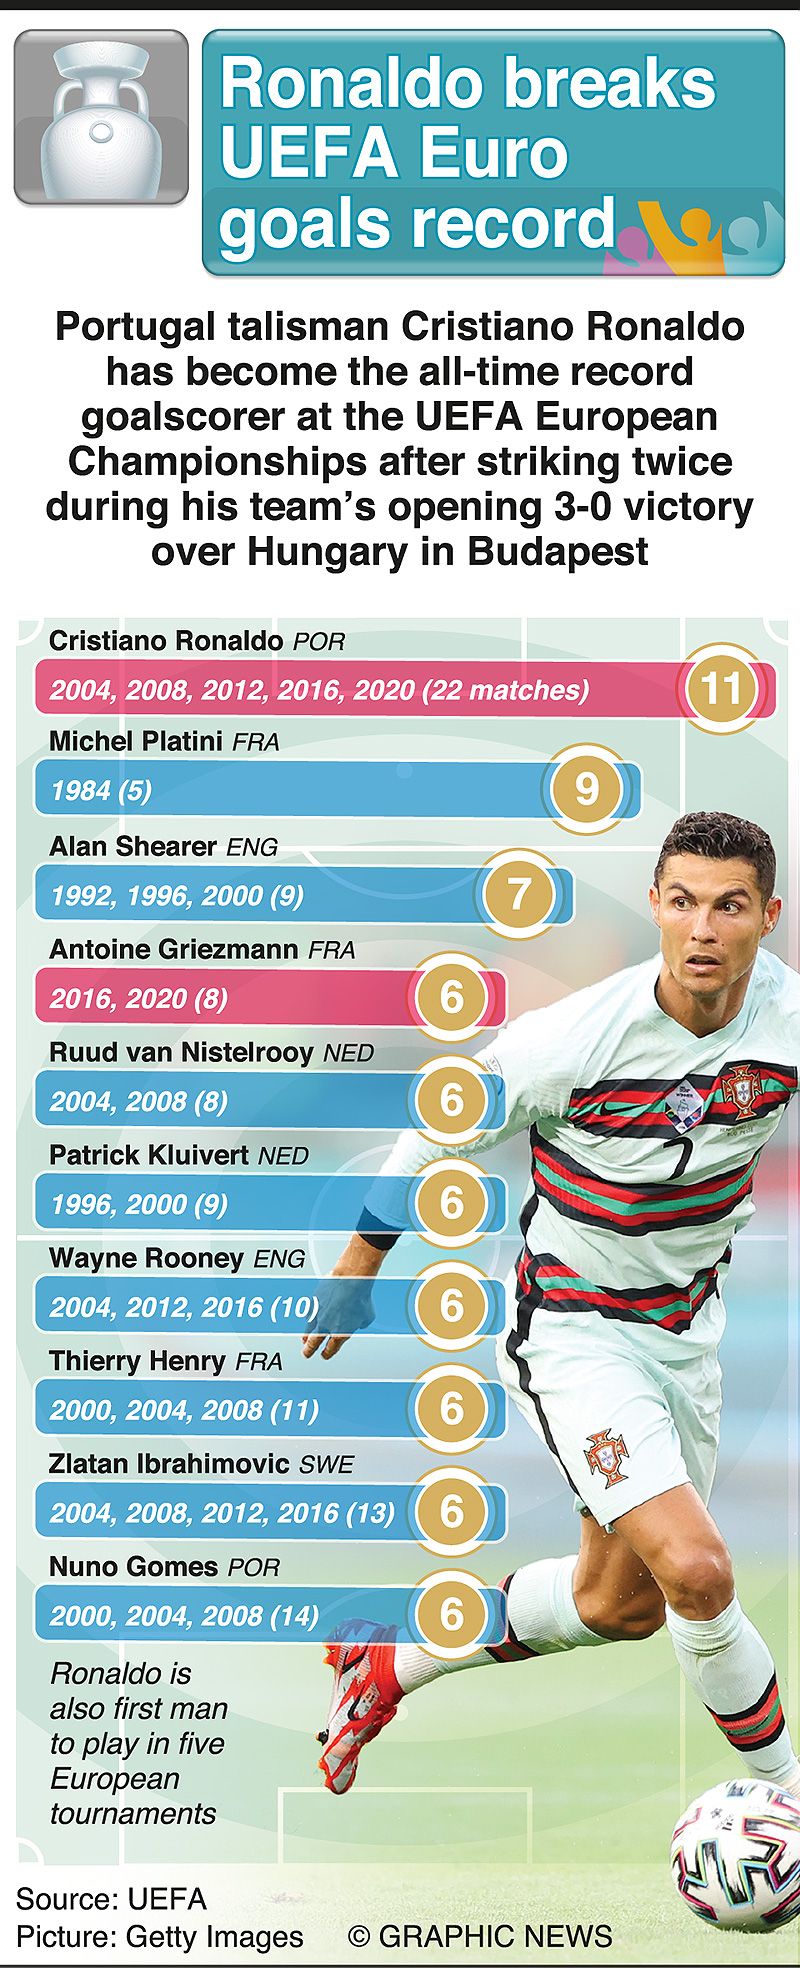  Cristiano Ronaldo breaks UEFA Euro goalscoring record